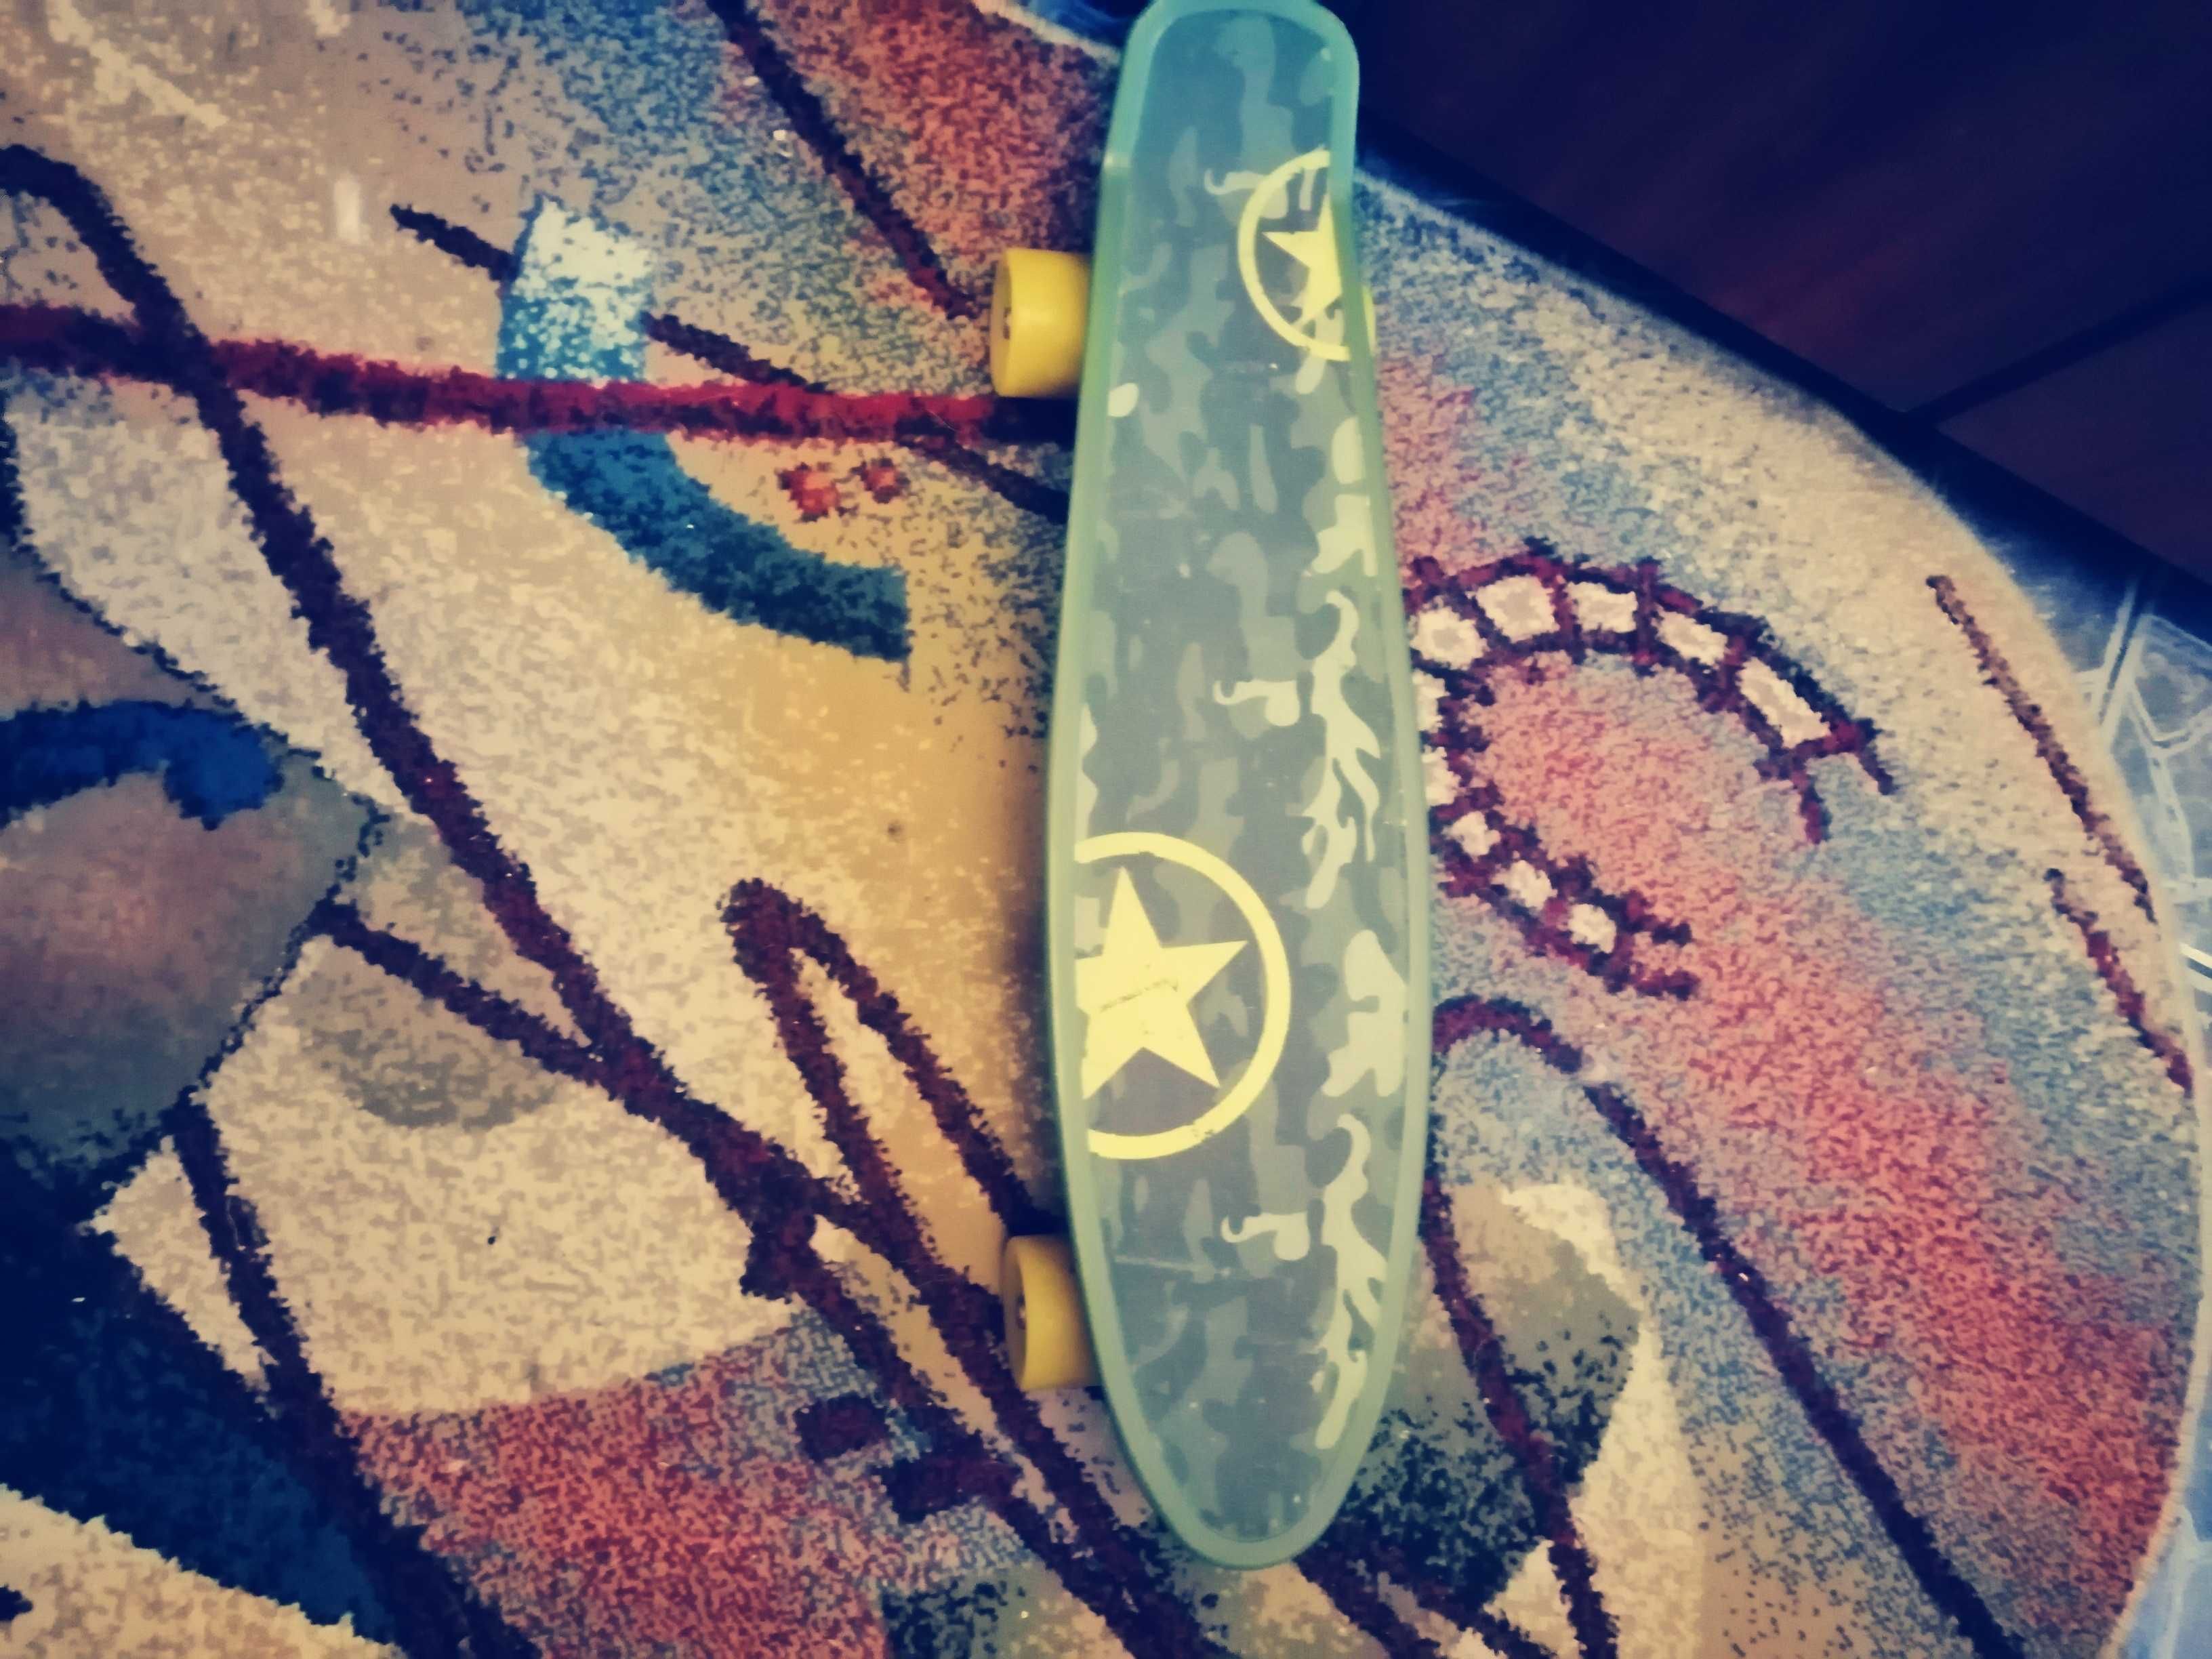 Penny board  skateboard millitary, model Army